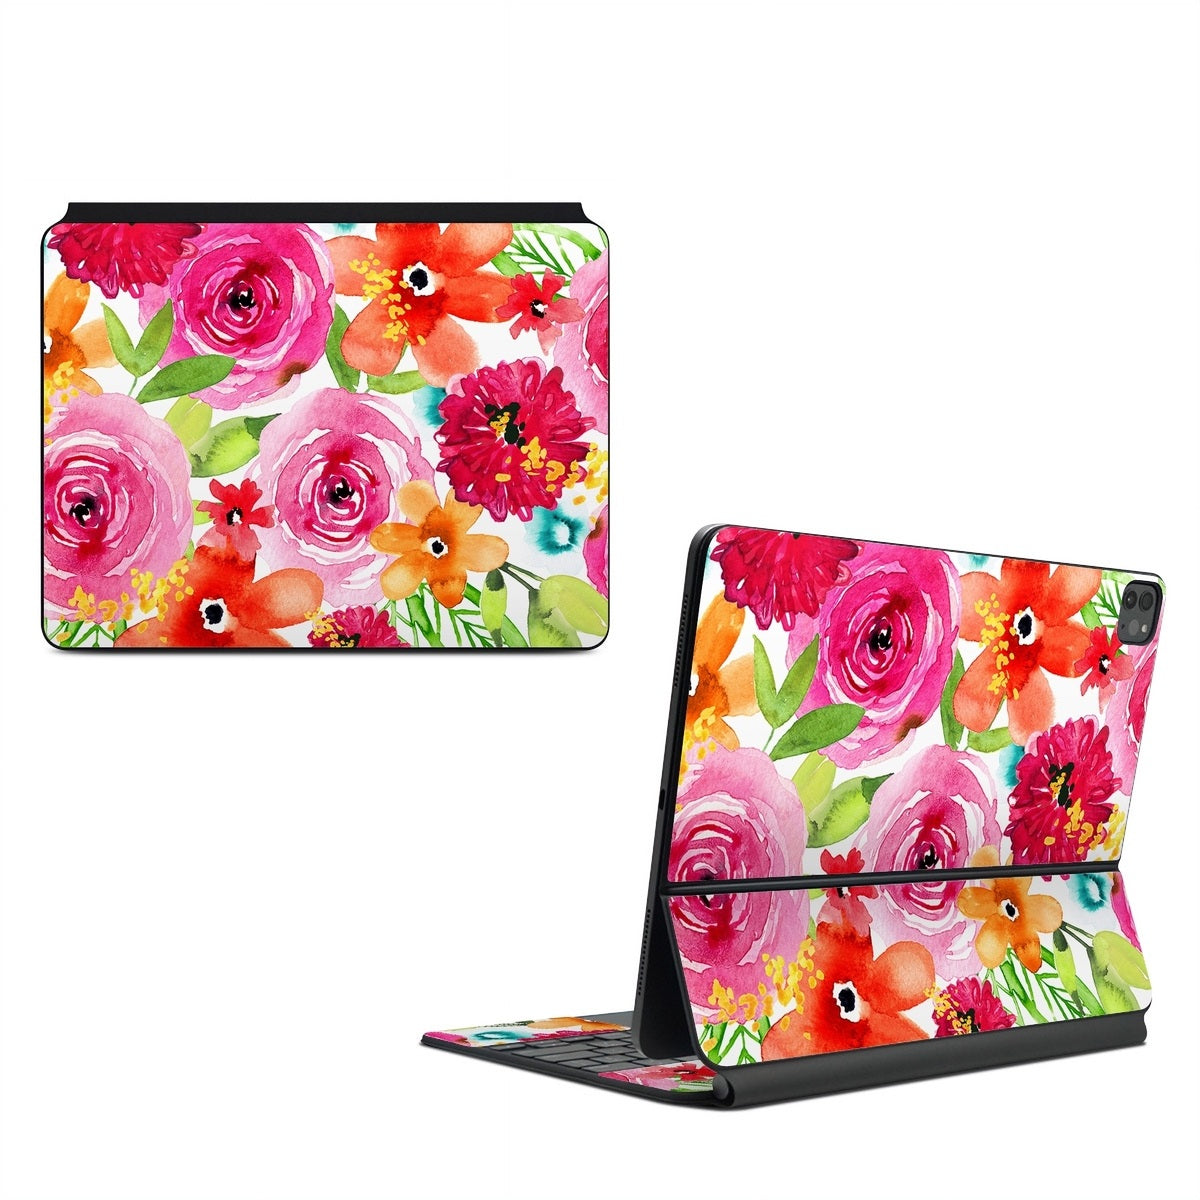 Floral Pop - Apple Magic Keyboard for iPad Skin